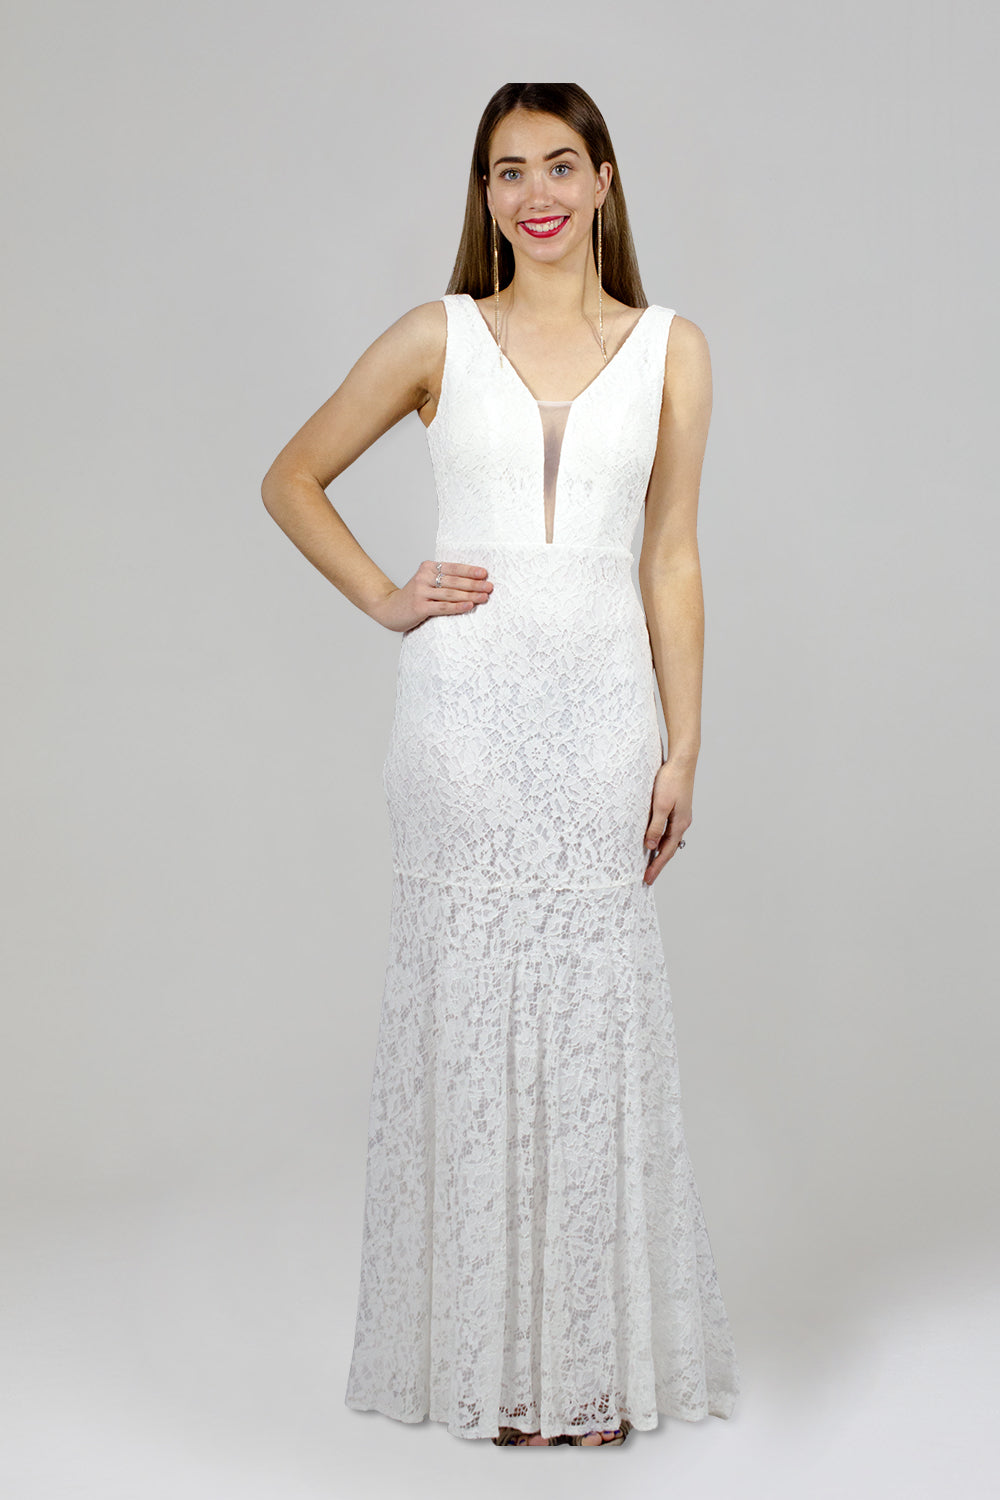 white lace bridesmaid dresses perth australia envious bridal & formal